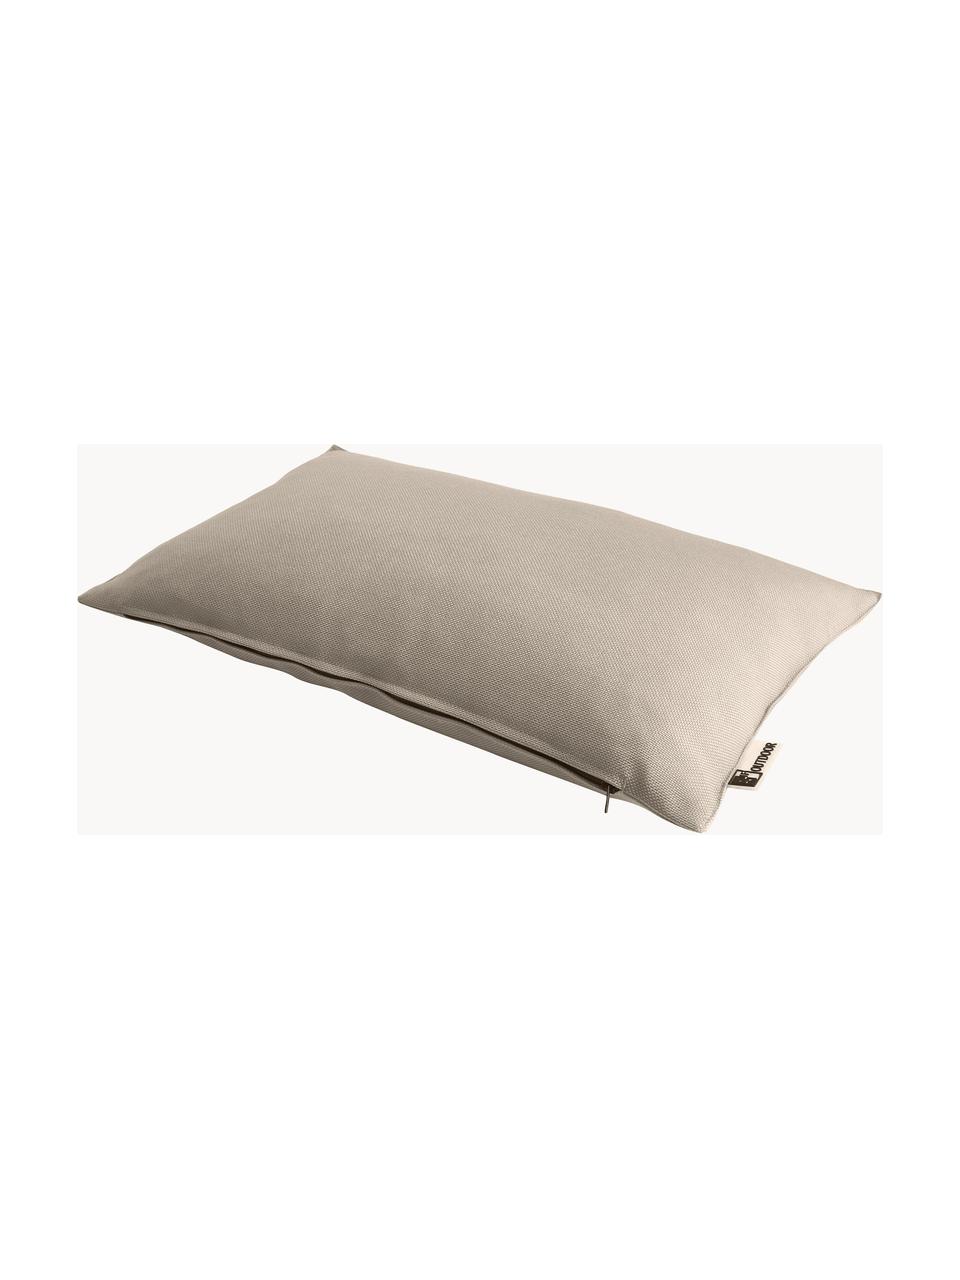 Cuscino da esterno Olef, 100% cotone, Beige, Larg. 30 x Lung. 50 cm